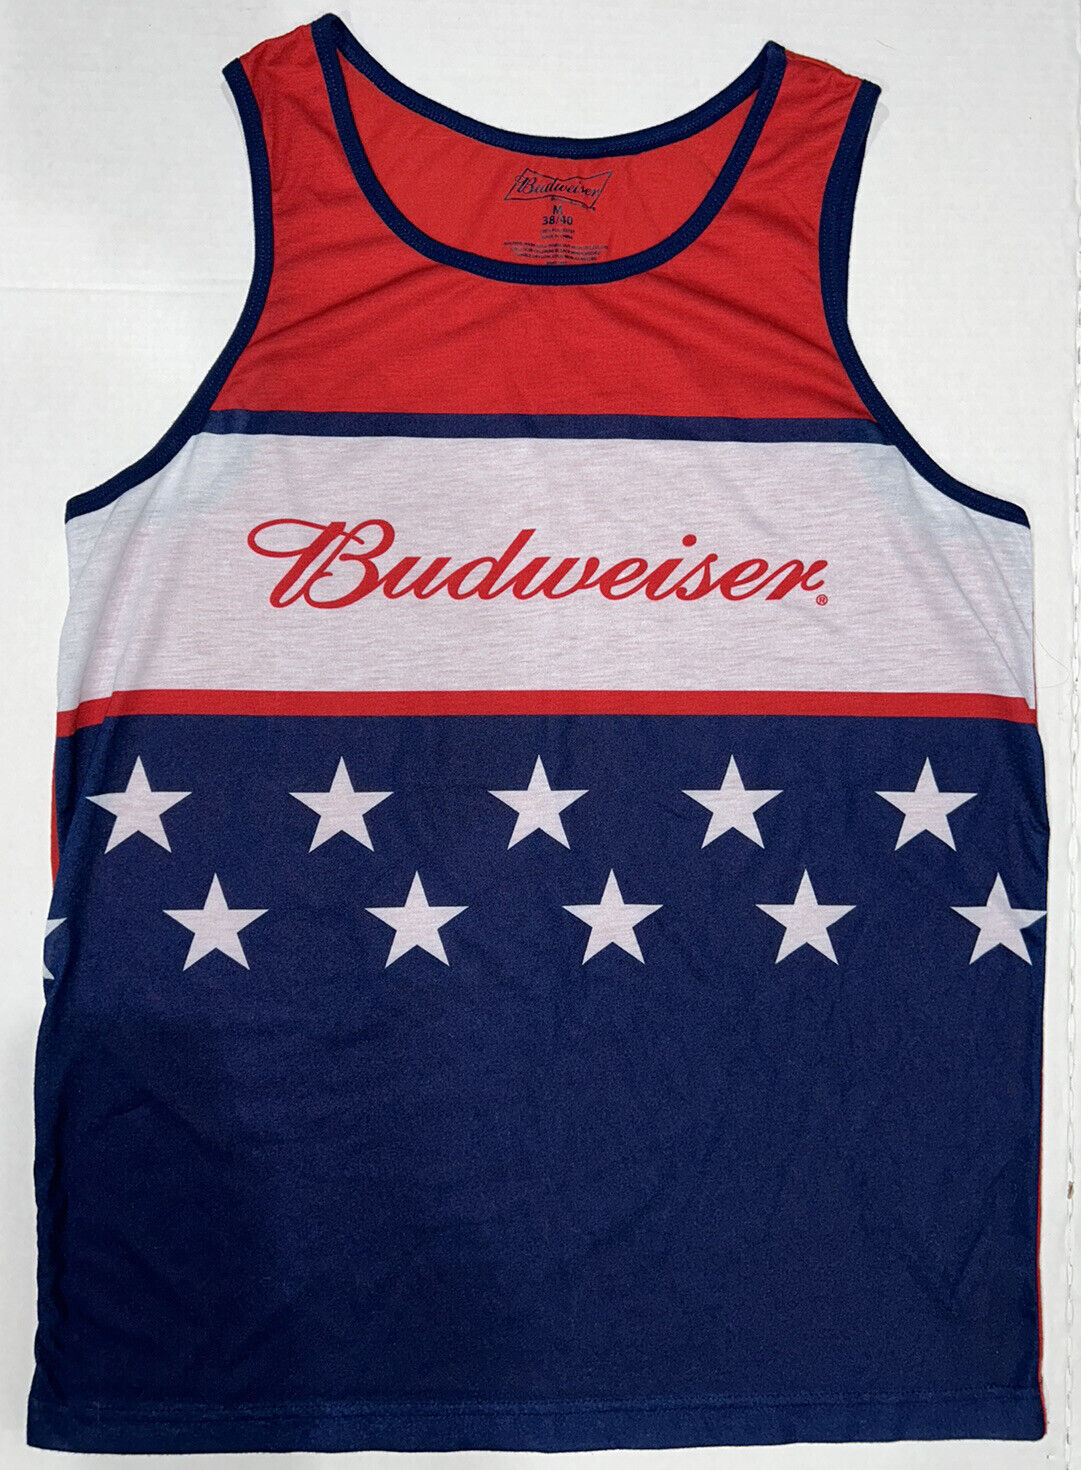 Budweiser Tank Top Sleeveless Shirt Size Medium Red White Blue Flag America BBQ